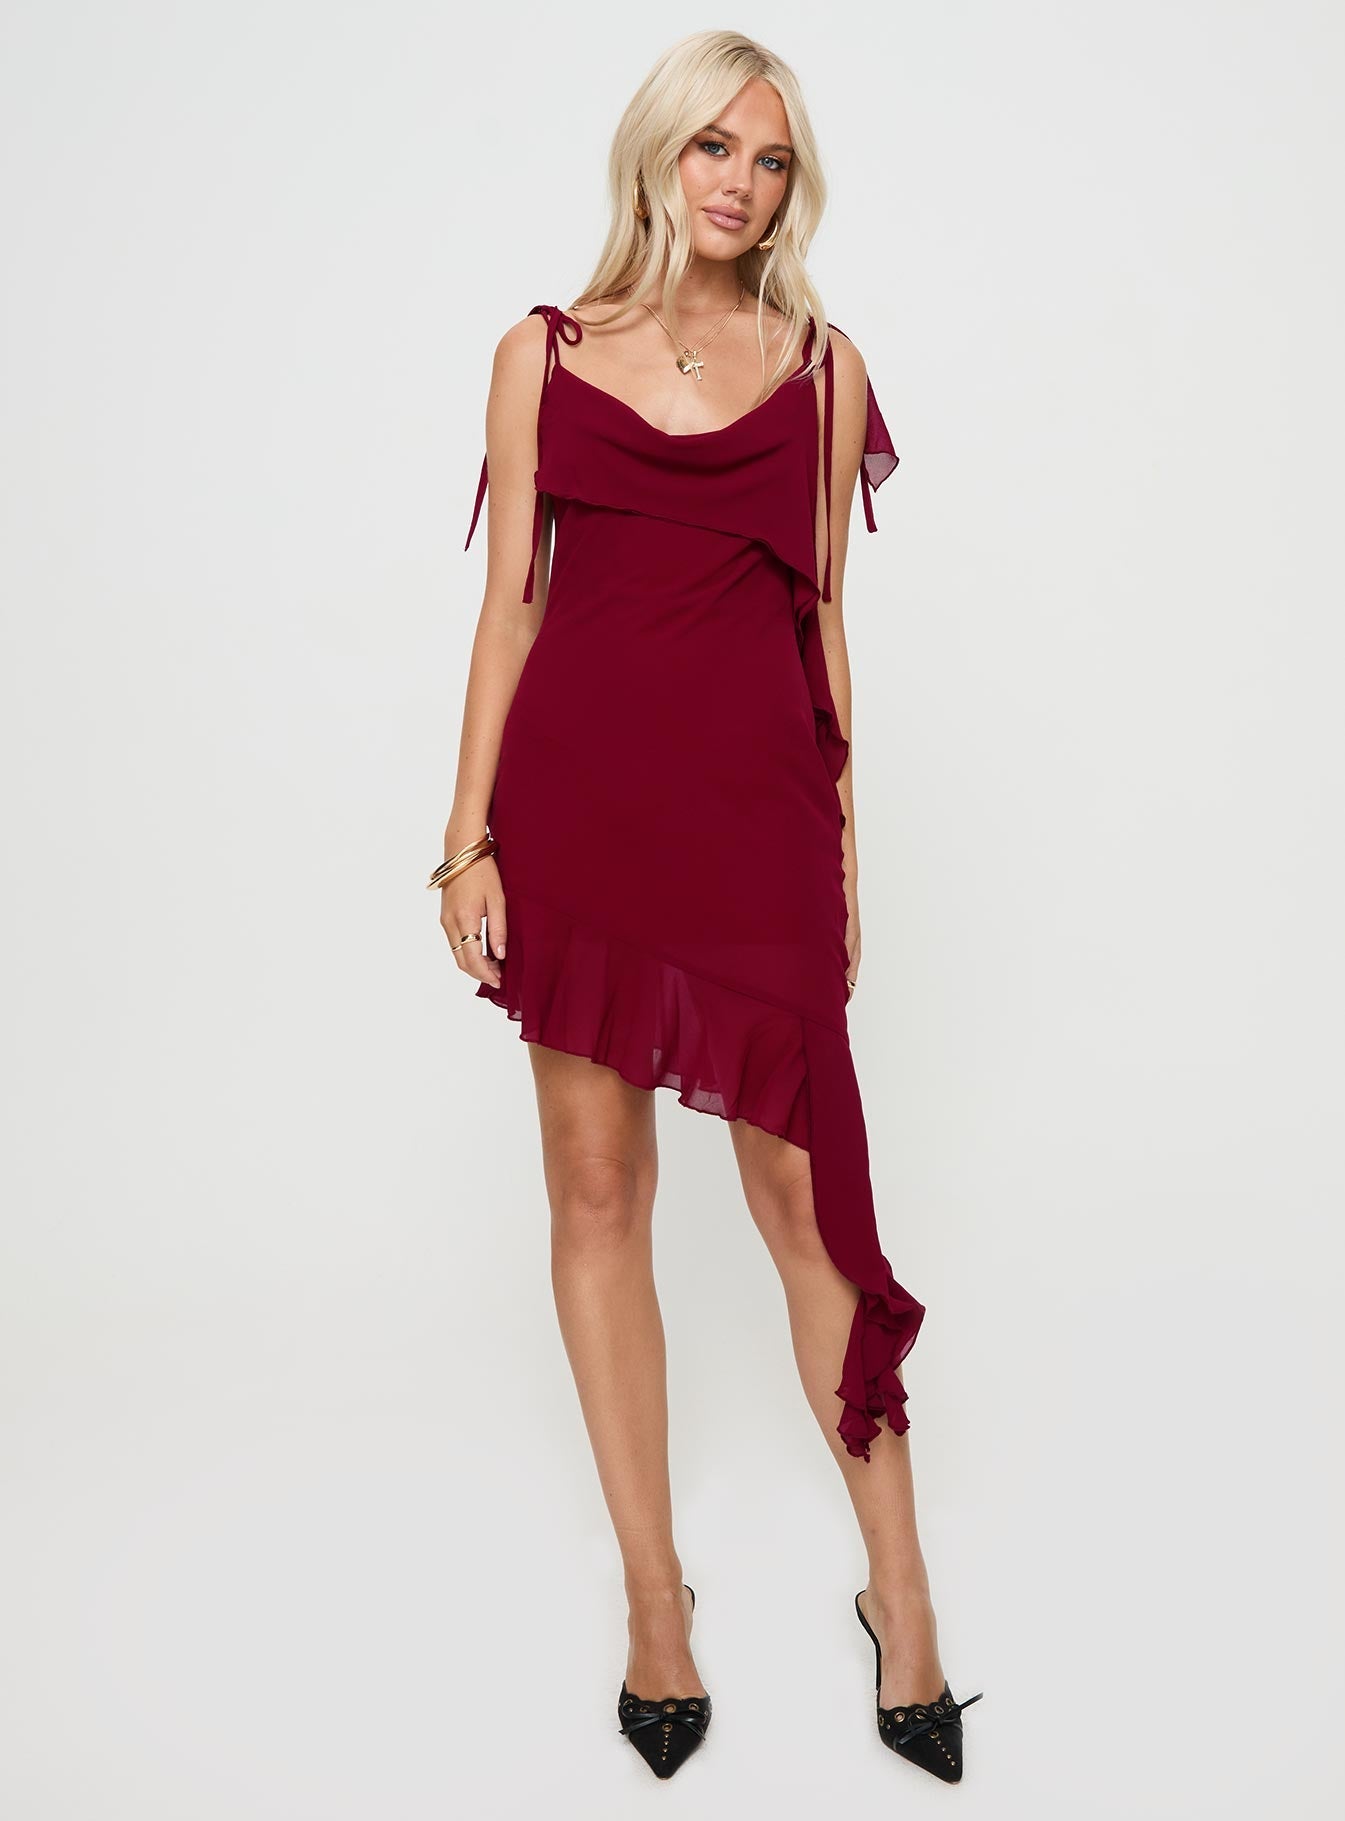 Shop Formal Dress - Dacian Mini Dress Burgundy fifth image